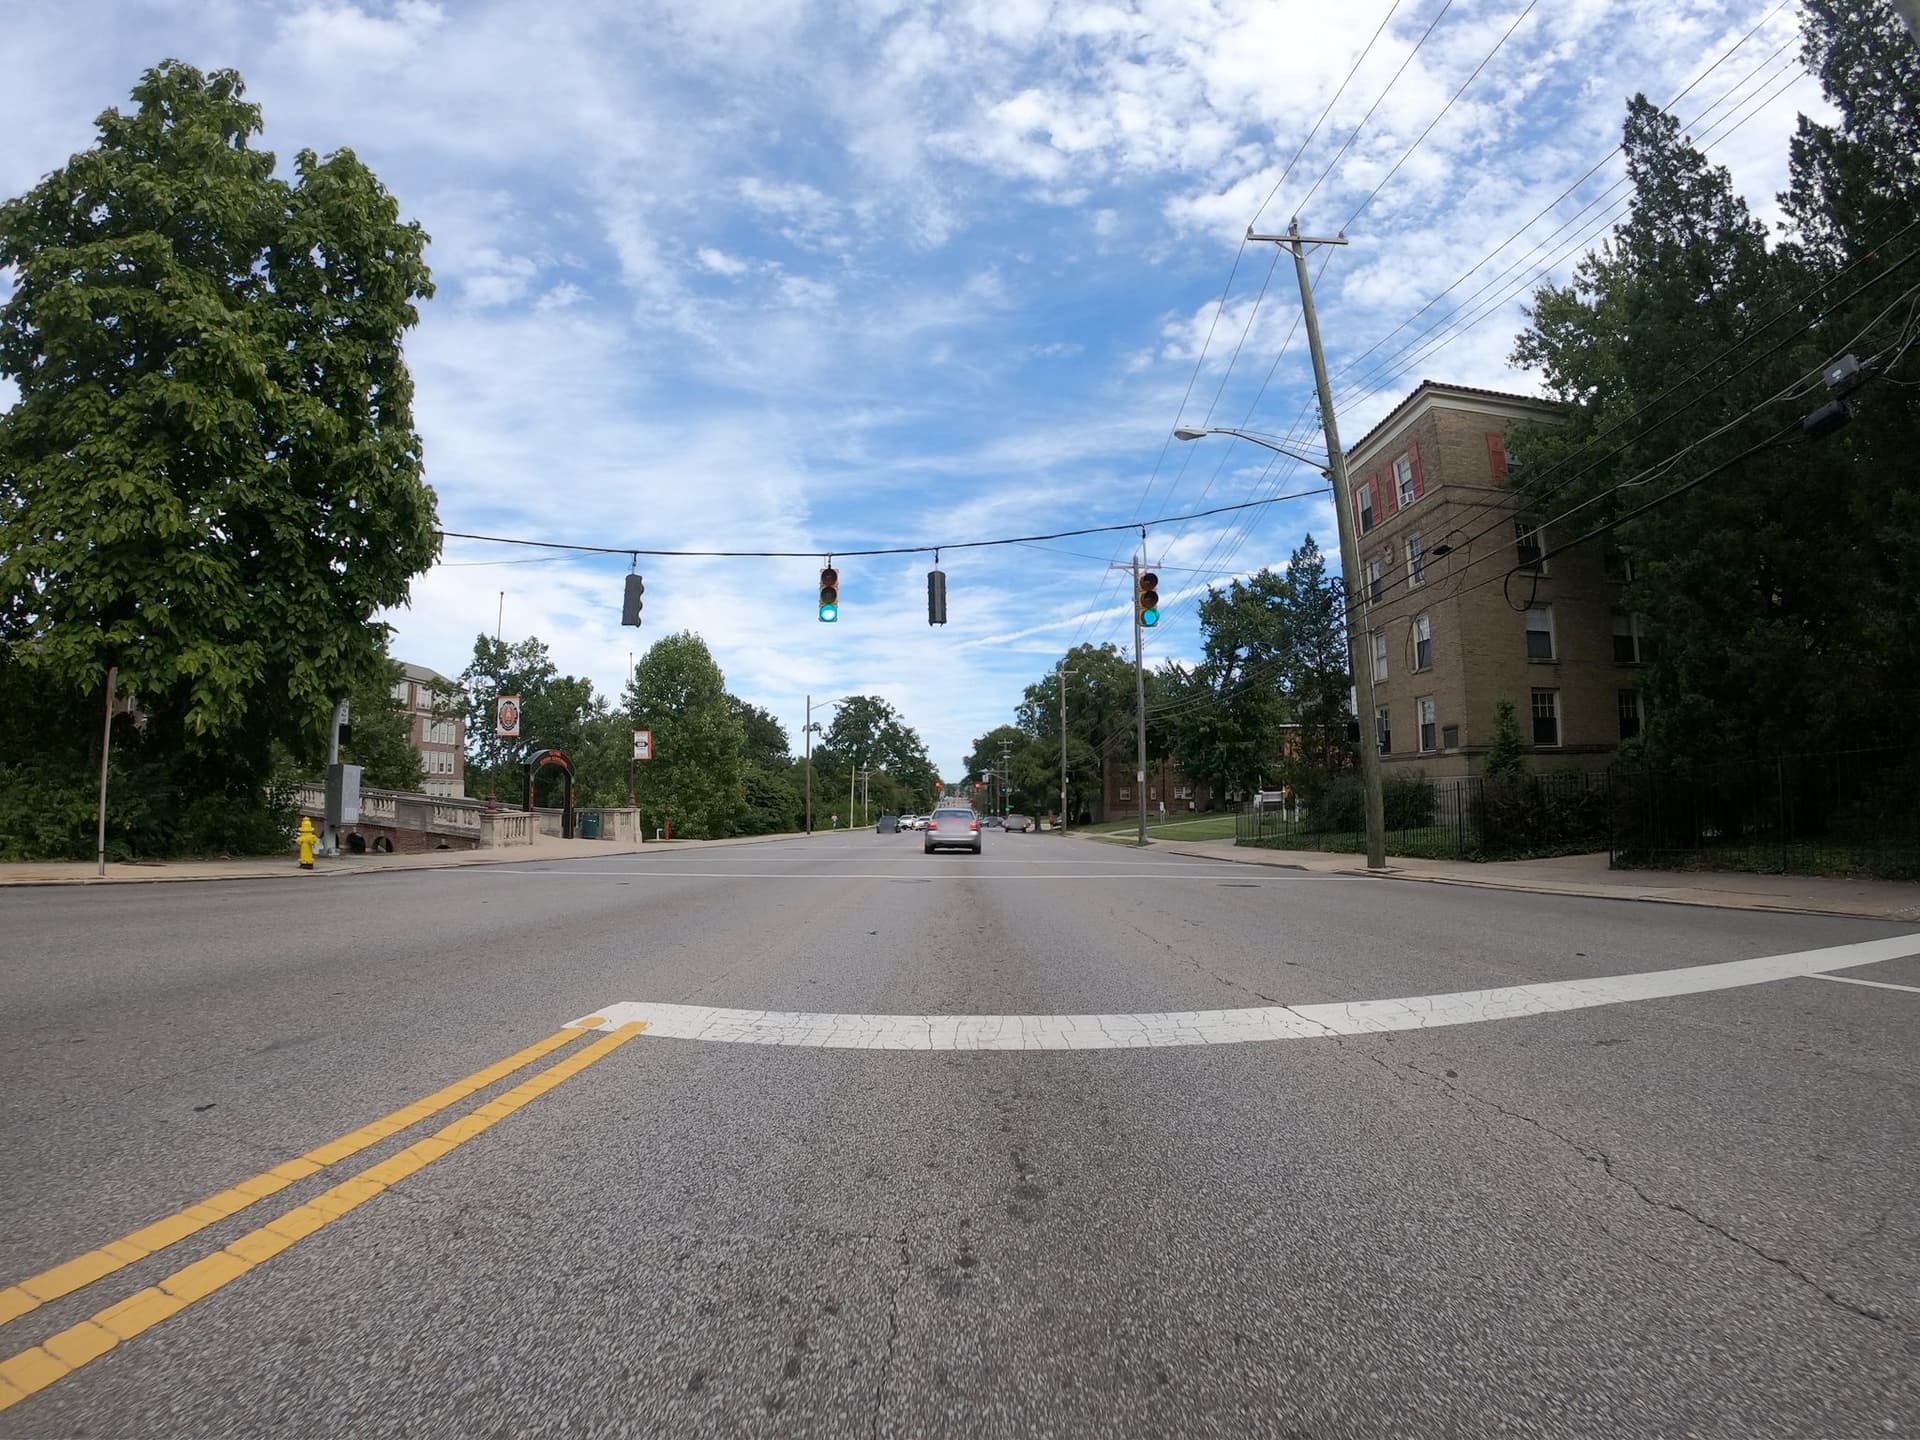 Madison Road, Cincinnati, Ohio (© realadamp, CC BY-SA 4.0)